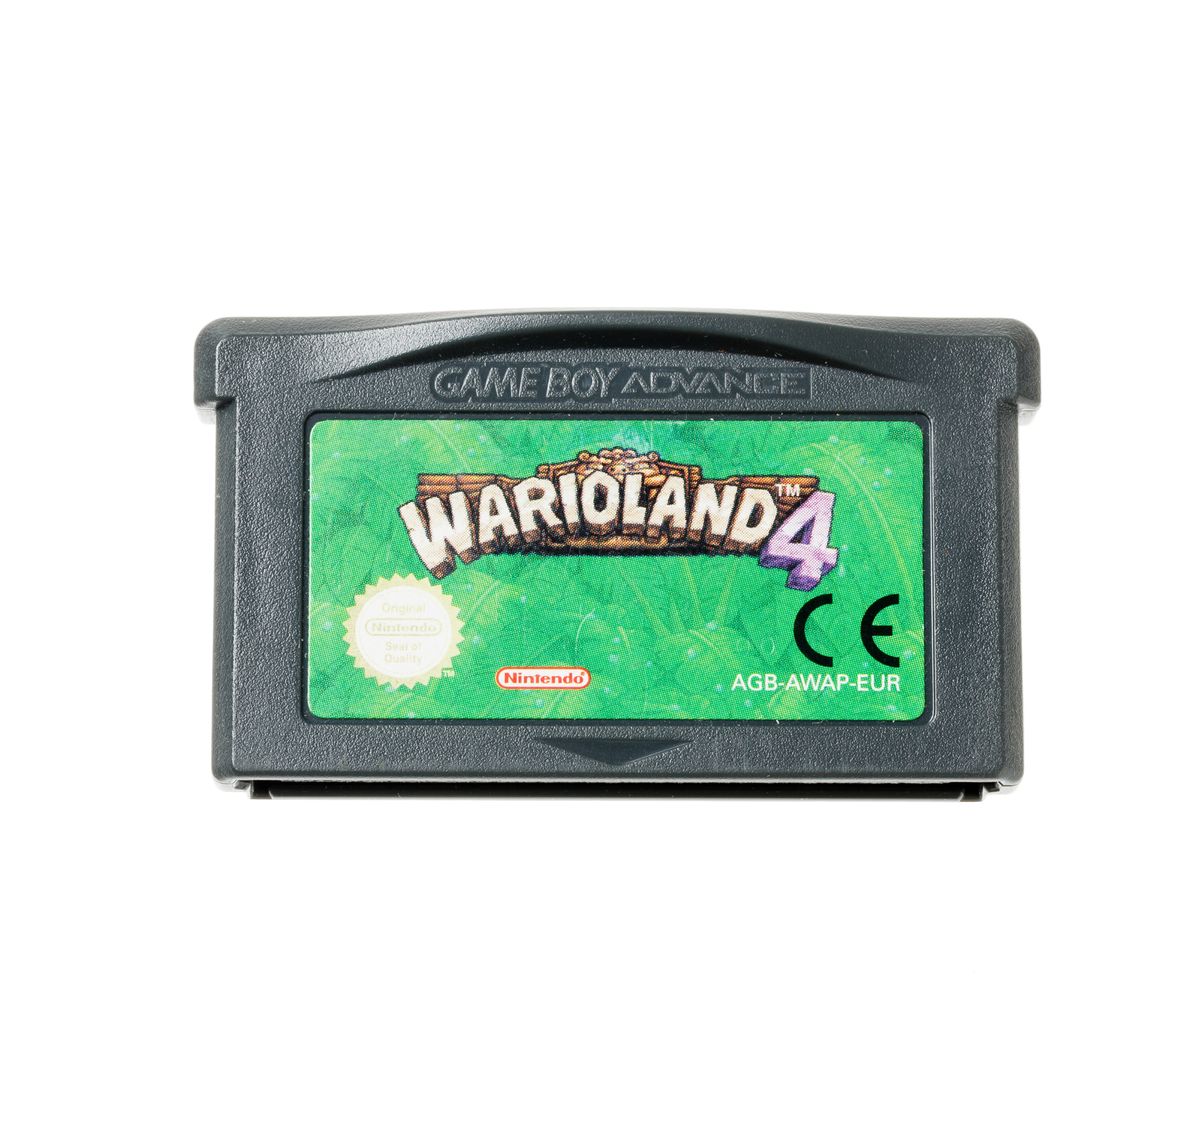 Warioland 4 Kopen | Gameboy Advance Games